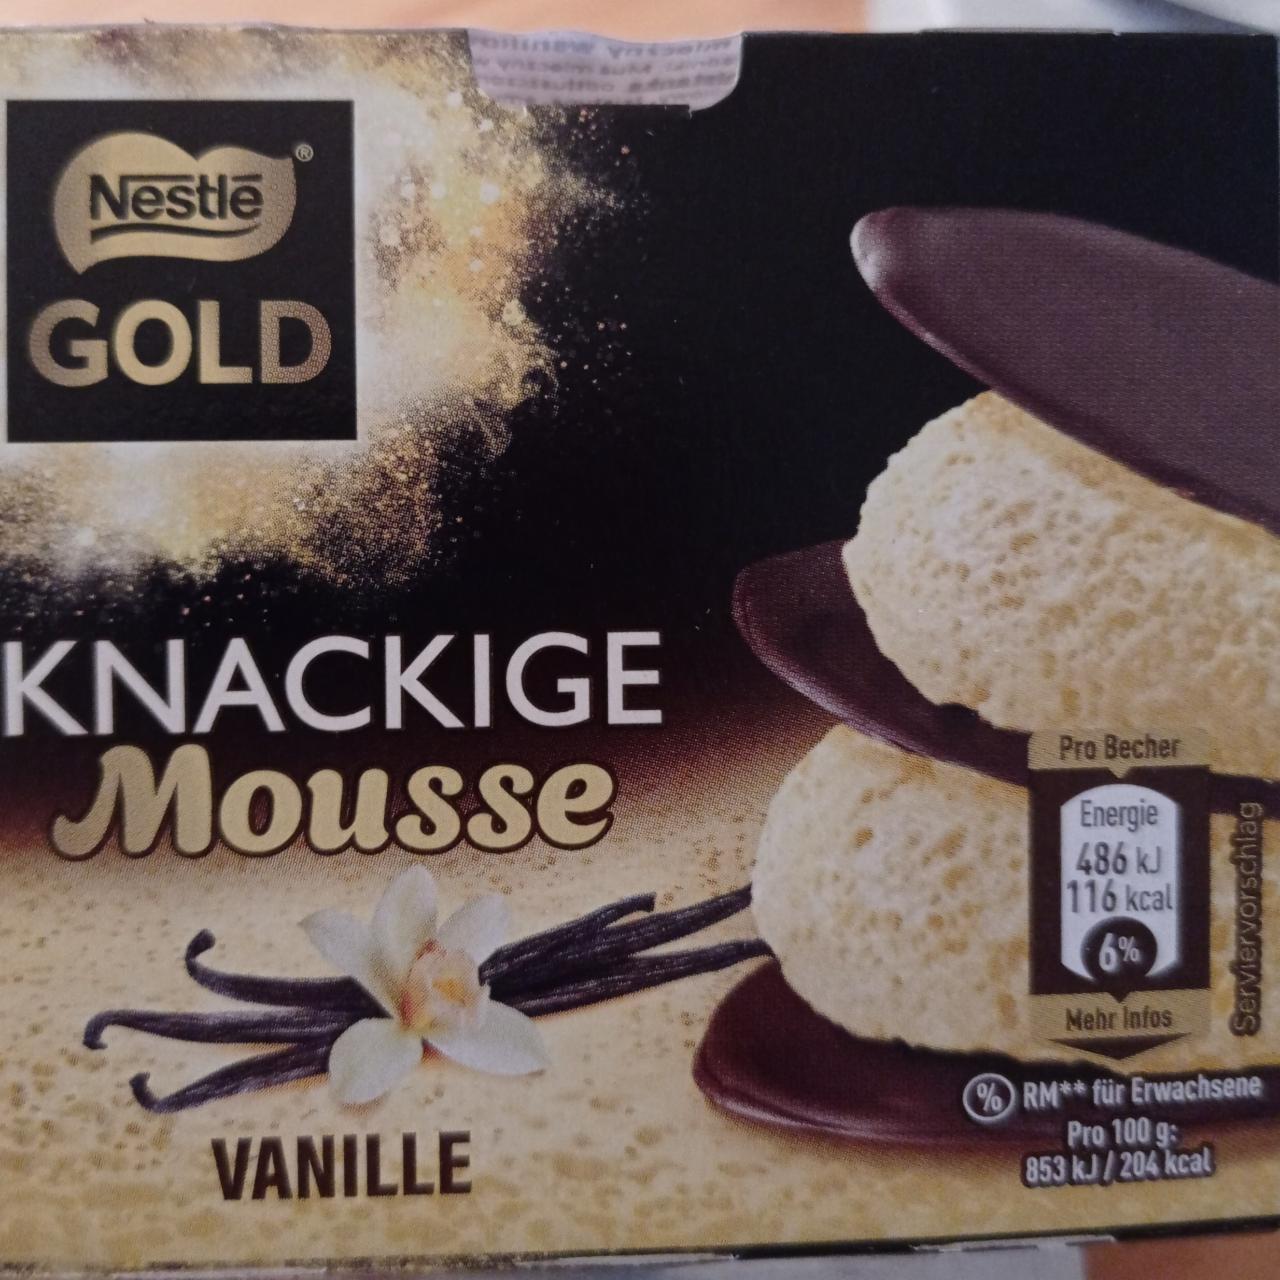 Zdjęcia - Knackoge Mouse vanille Nestle gold